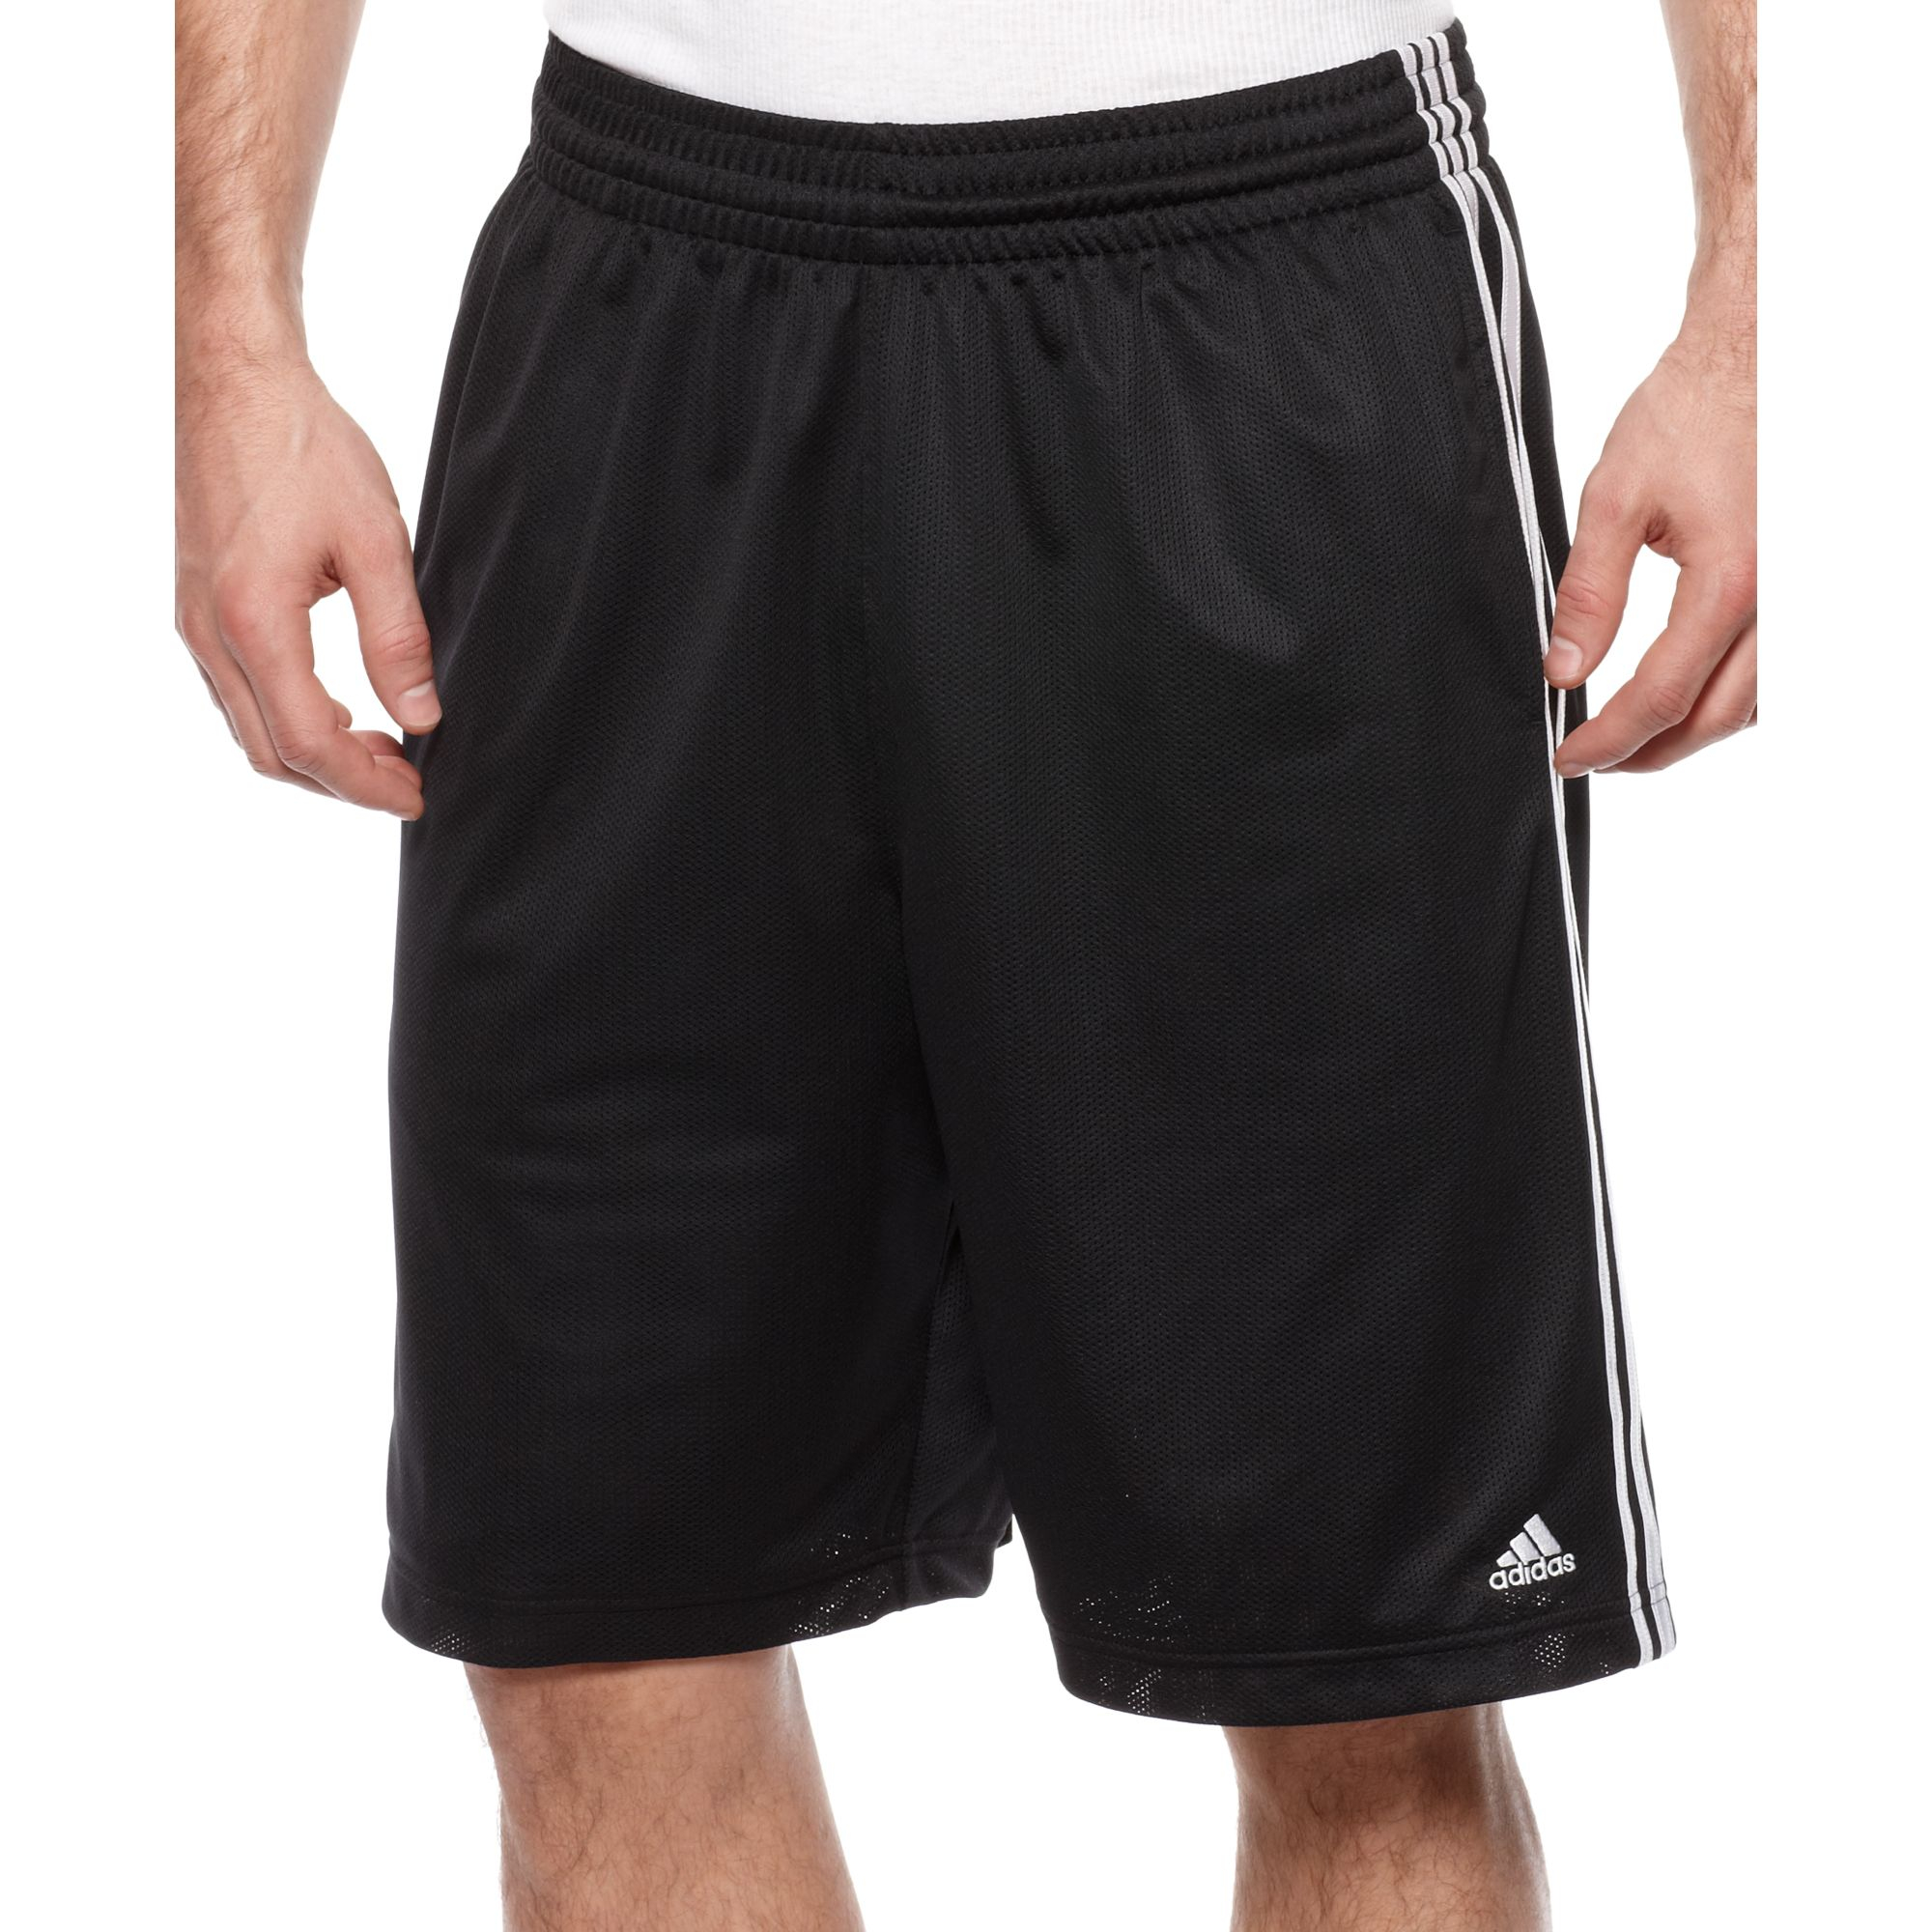 adidas Triple Up Mesh Basketball Shorts in Black/White (Black) for Men